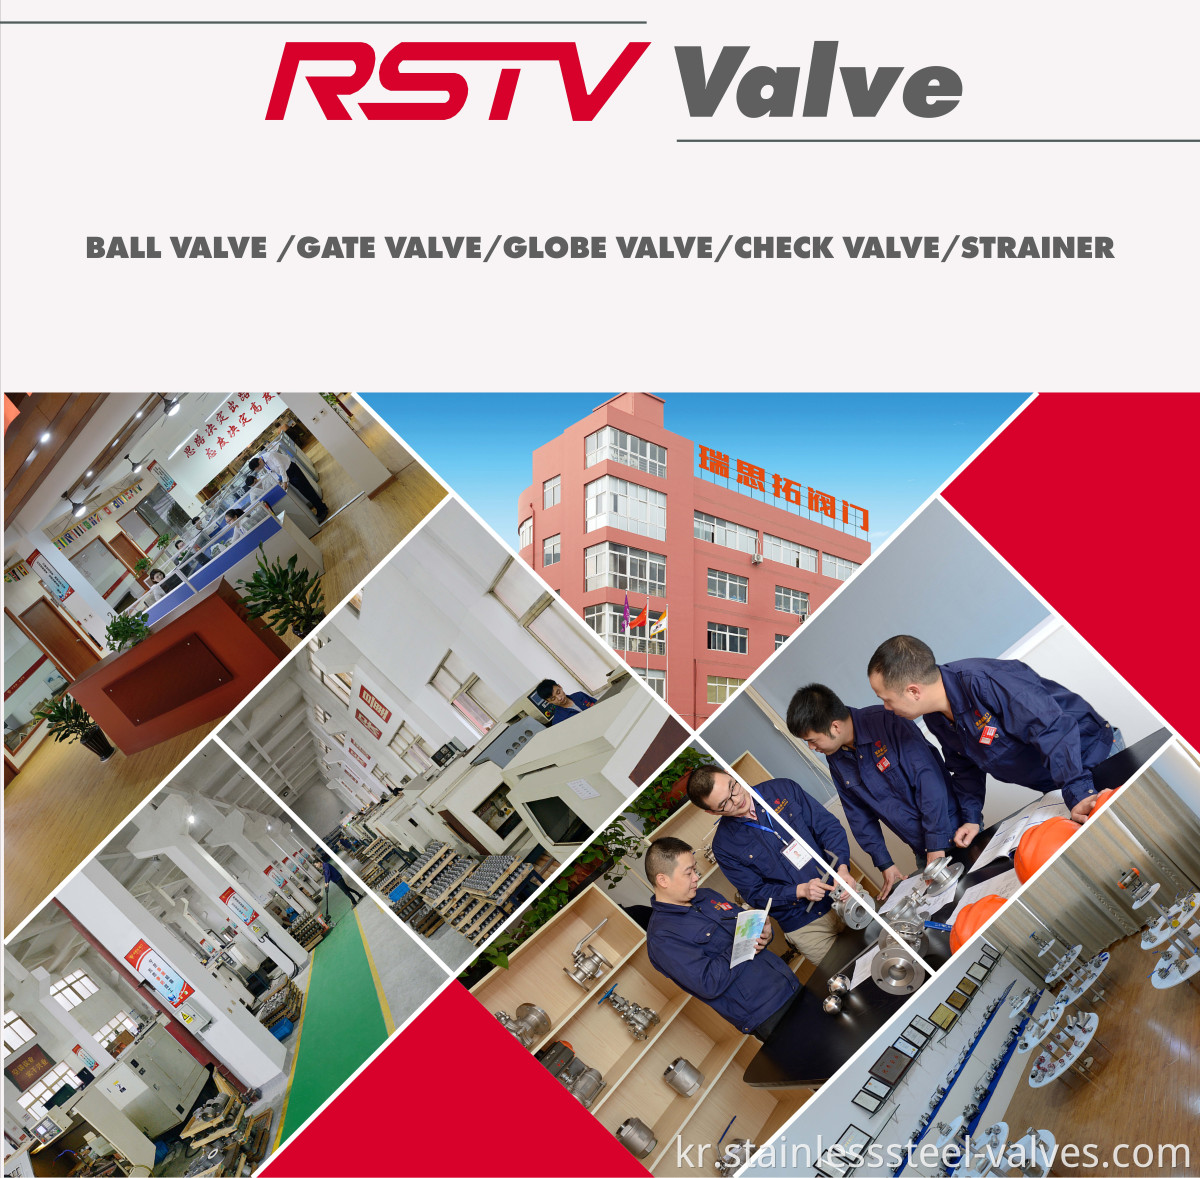 RST VALVE STAINLESS STEEL BALL GATE GLOBE CHECK VALVE FACTROY